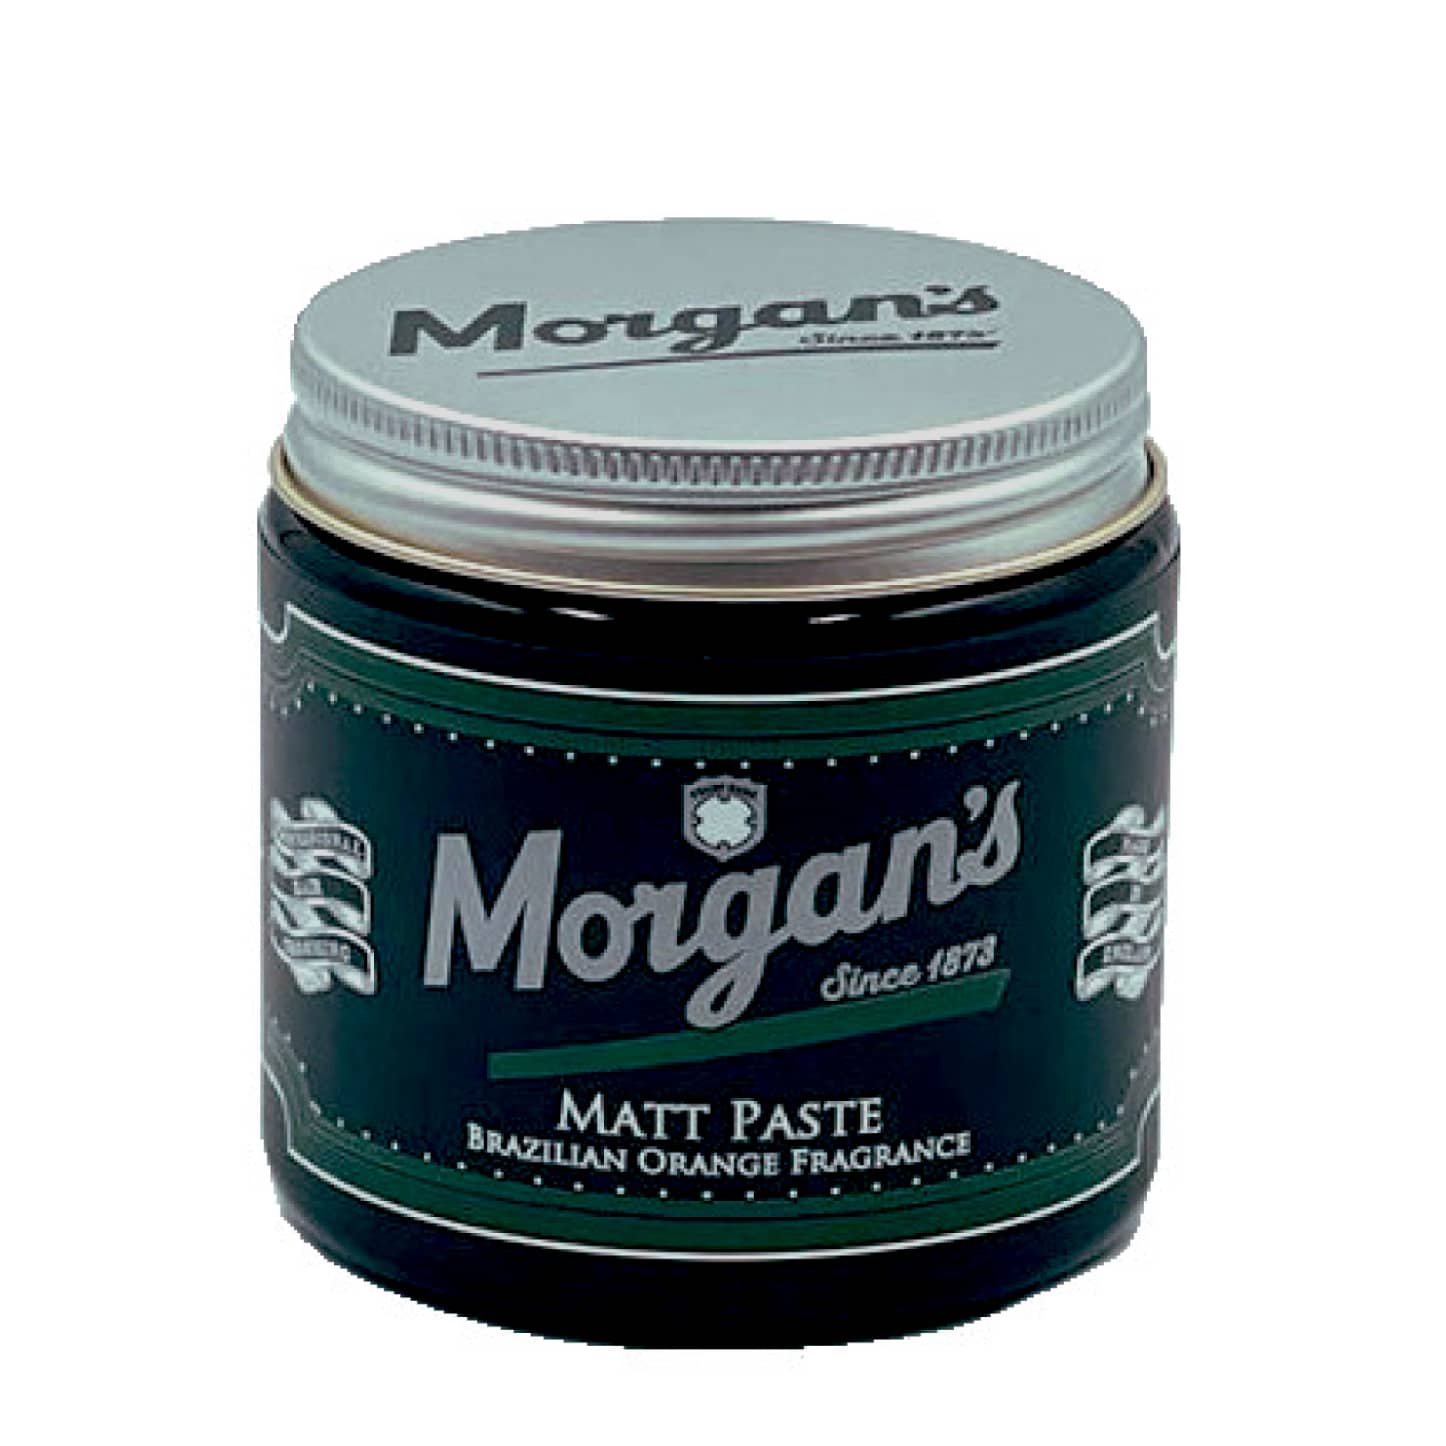 Morgan's Matt Paste Fragancia de Naranja Brasileña 75ml